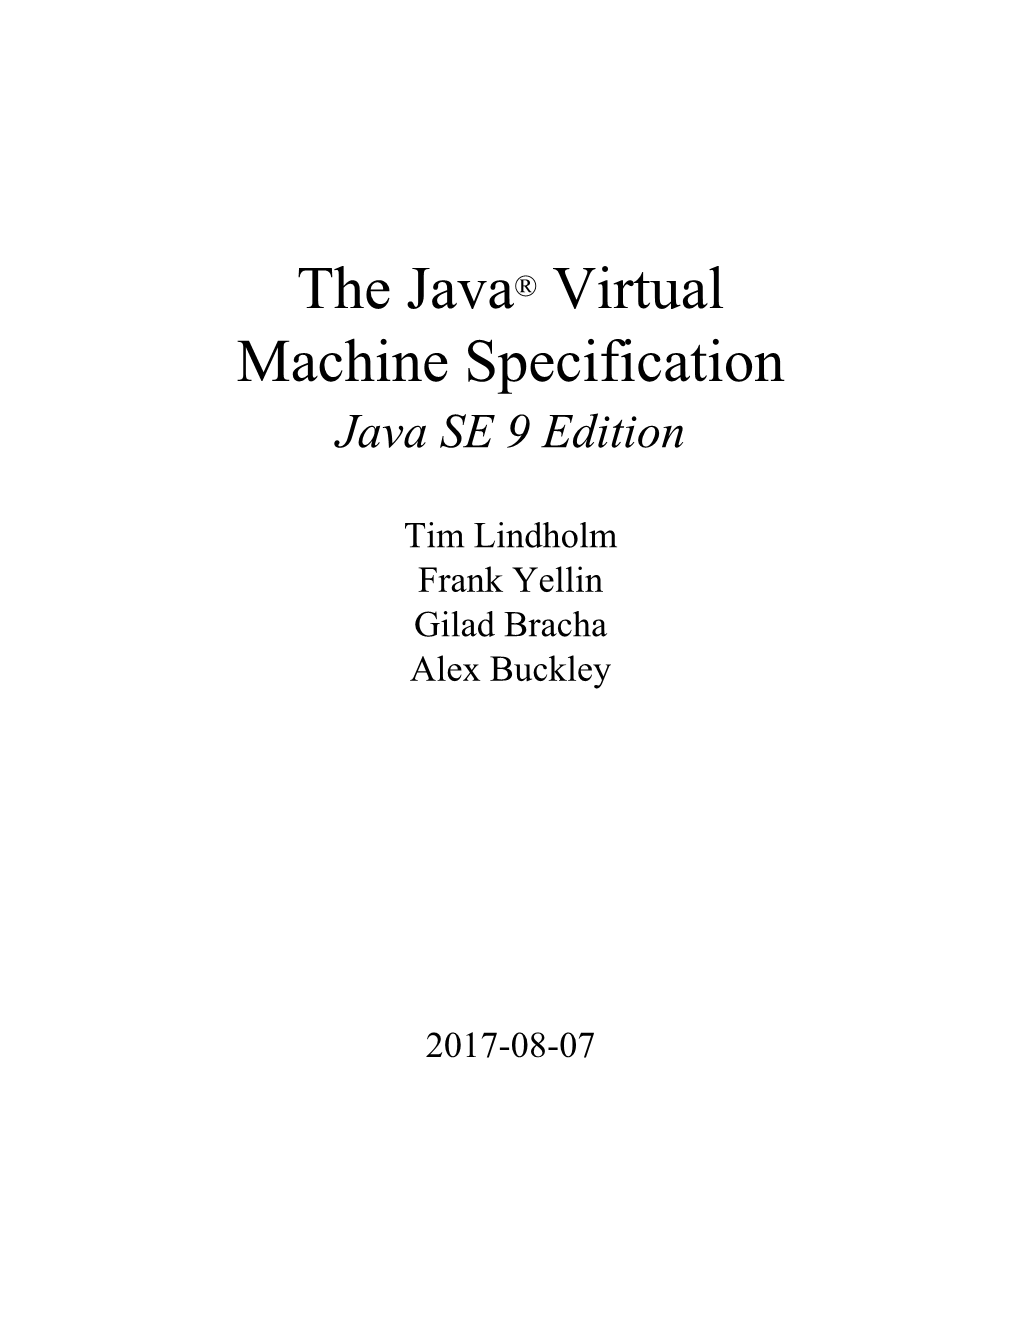 The Java® Virtual Machine Specification Java SE 9 Edition